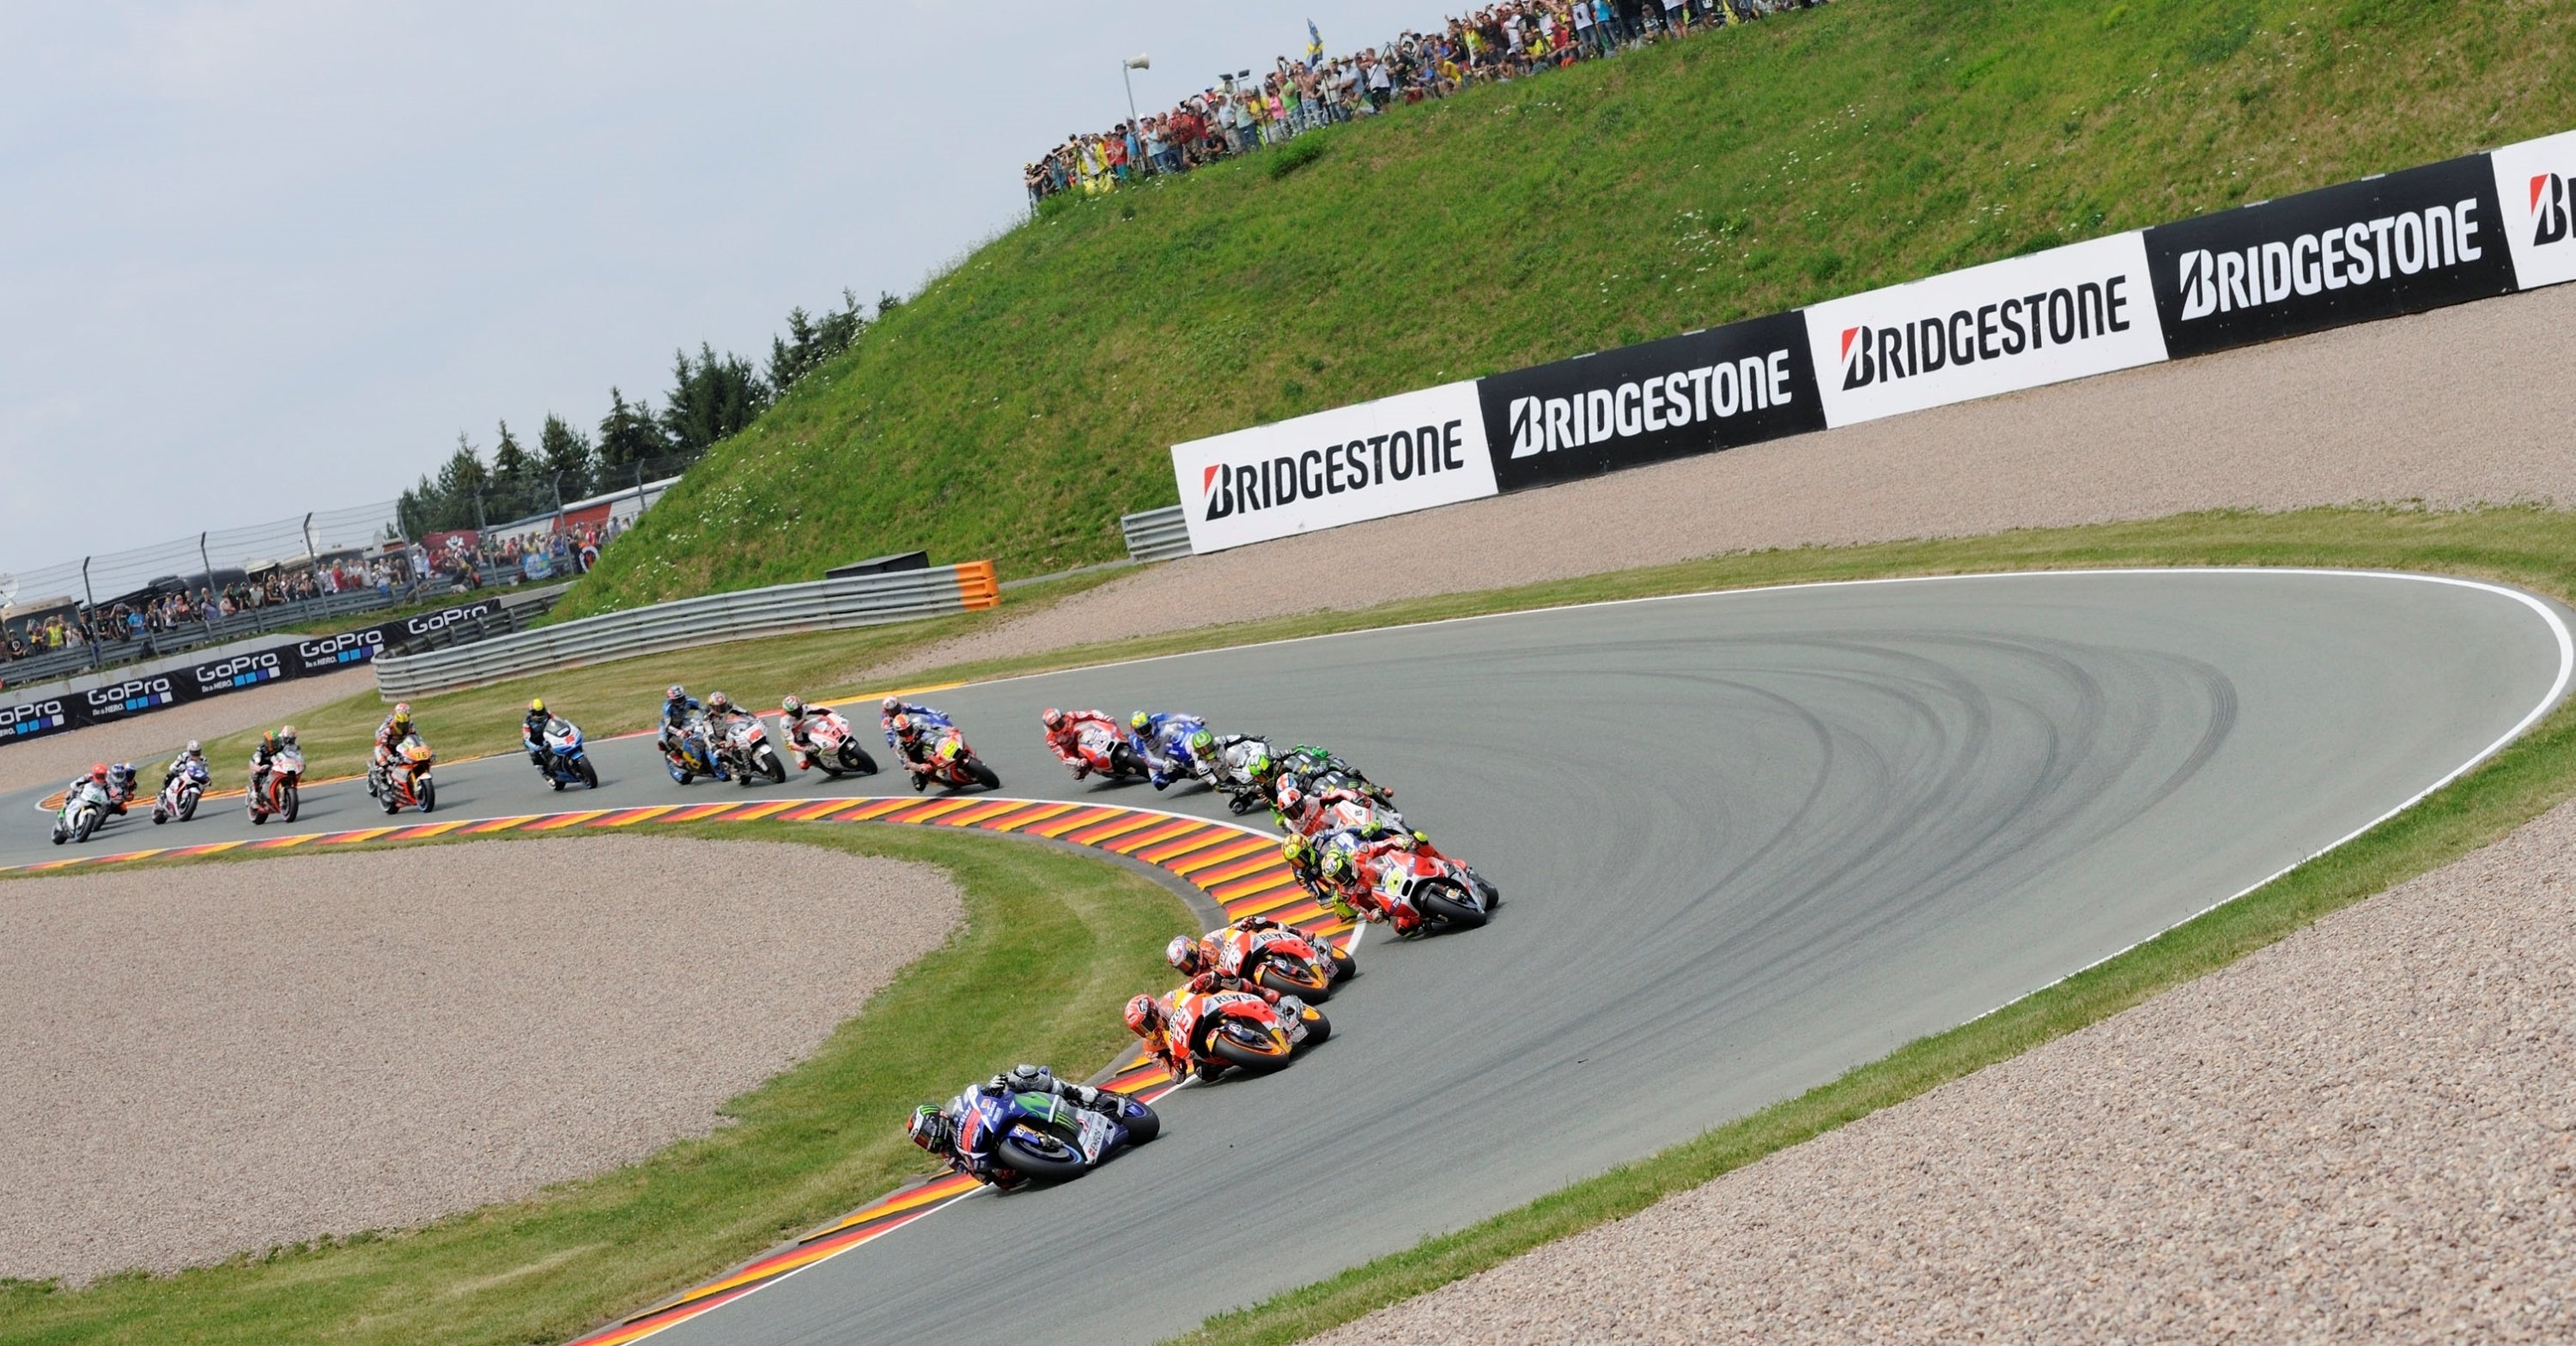 MotoGP Sachsenring, Bridgestone: &ldquo;Proseguiamo nello sviluppo&rdquo;